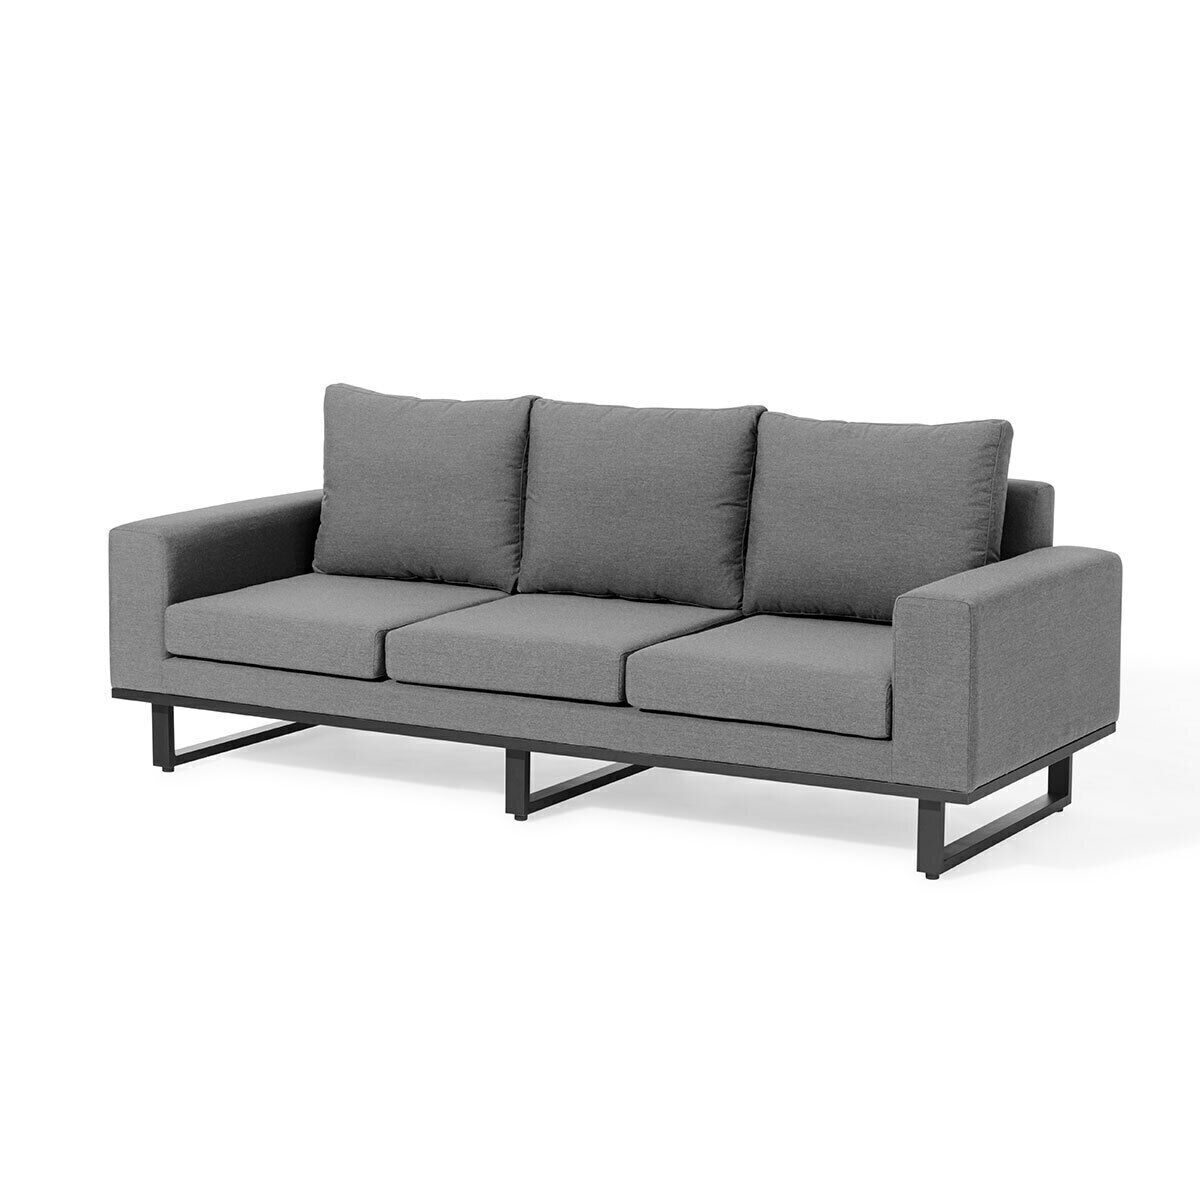 Maze - Outdoor Fabric Ethos 3 Seat Sofa Set - Flanelle product image